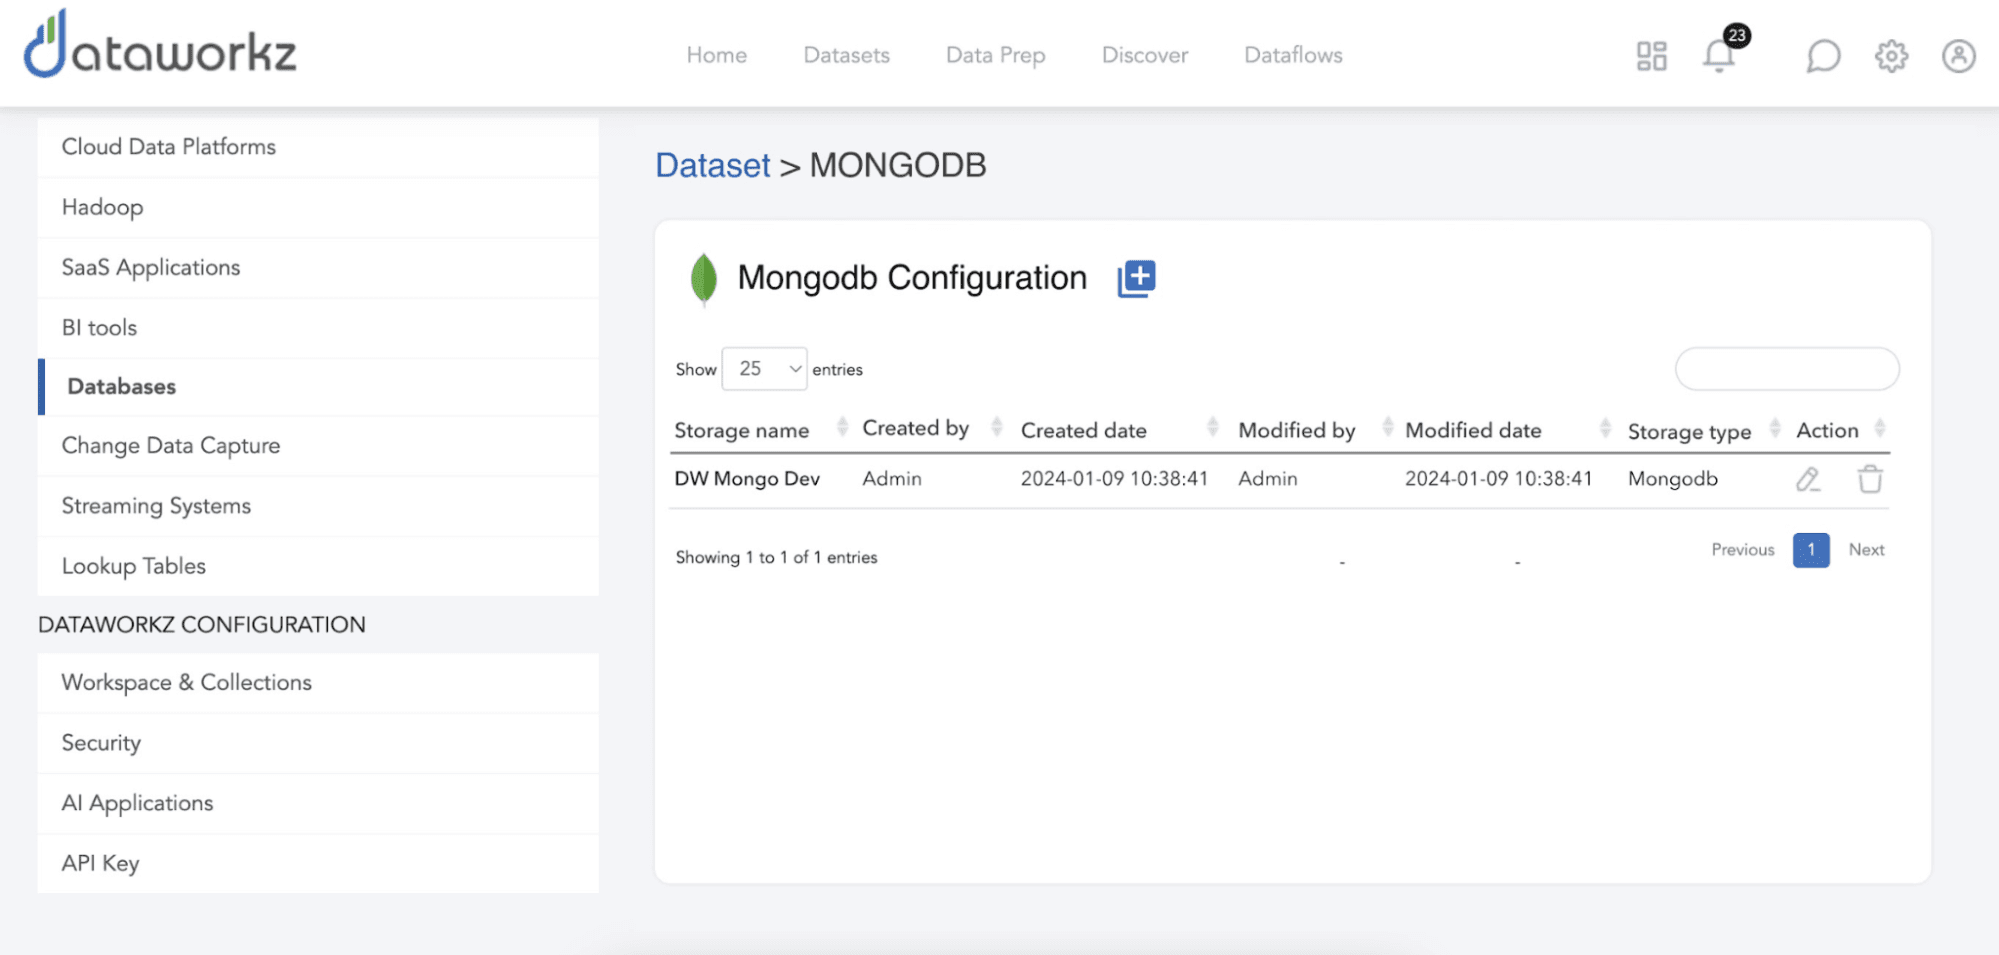 MongoDB Atlas definition in Dataworkz